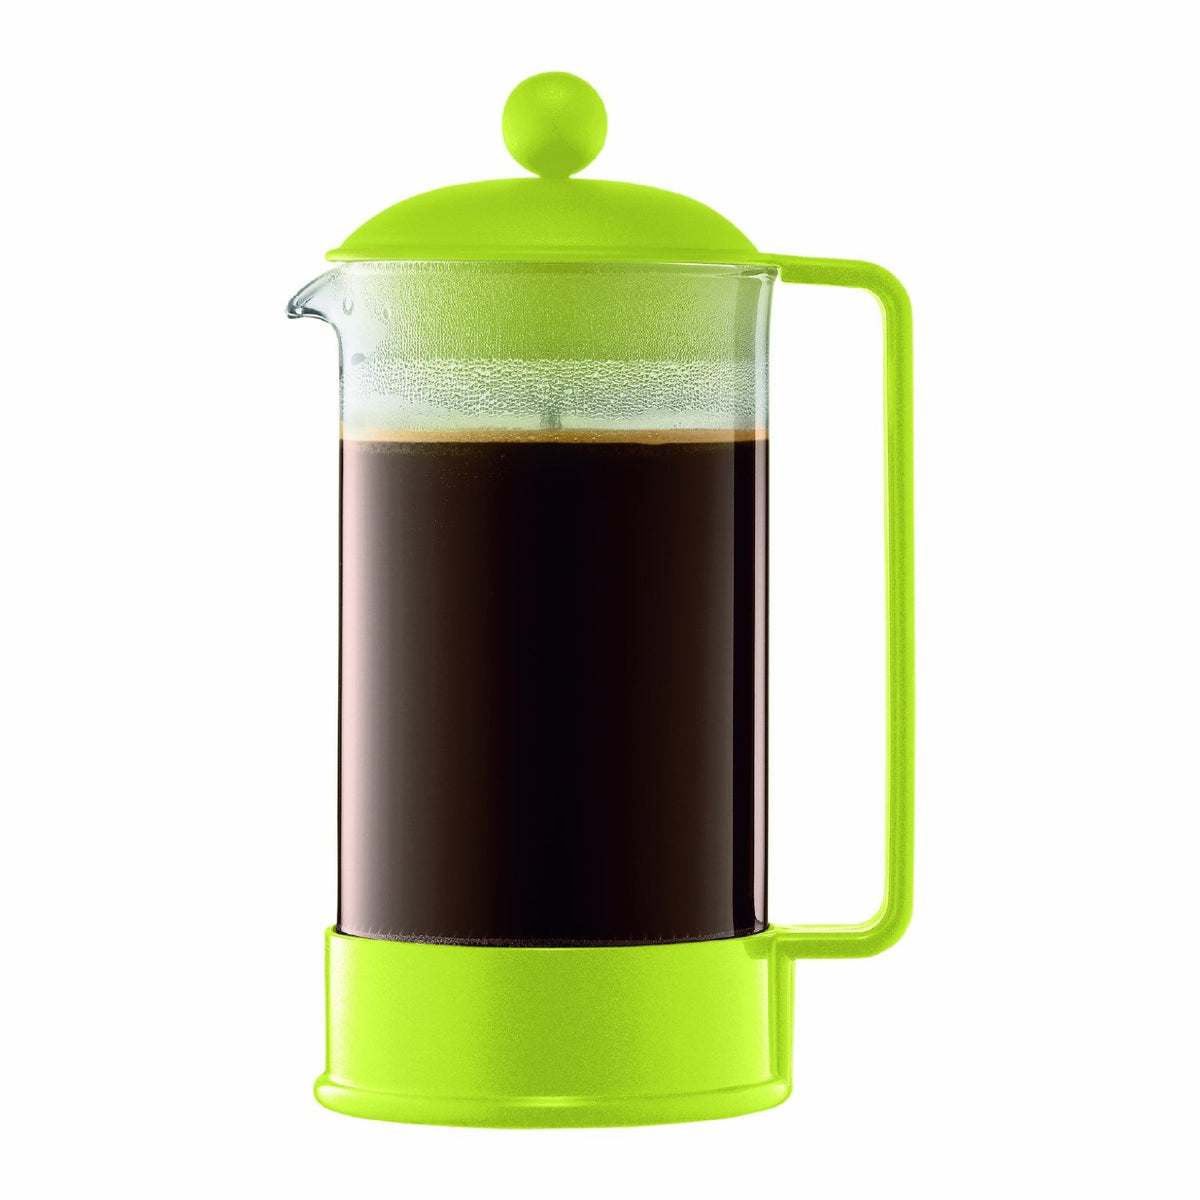 buy coffee & tea appliances at cheap rate in bulk. wholesale & retail bulk home appliances store.